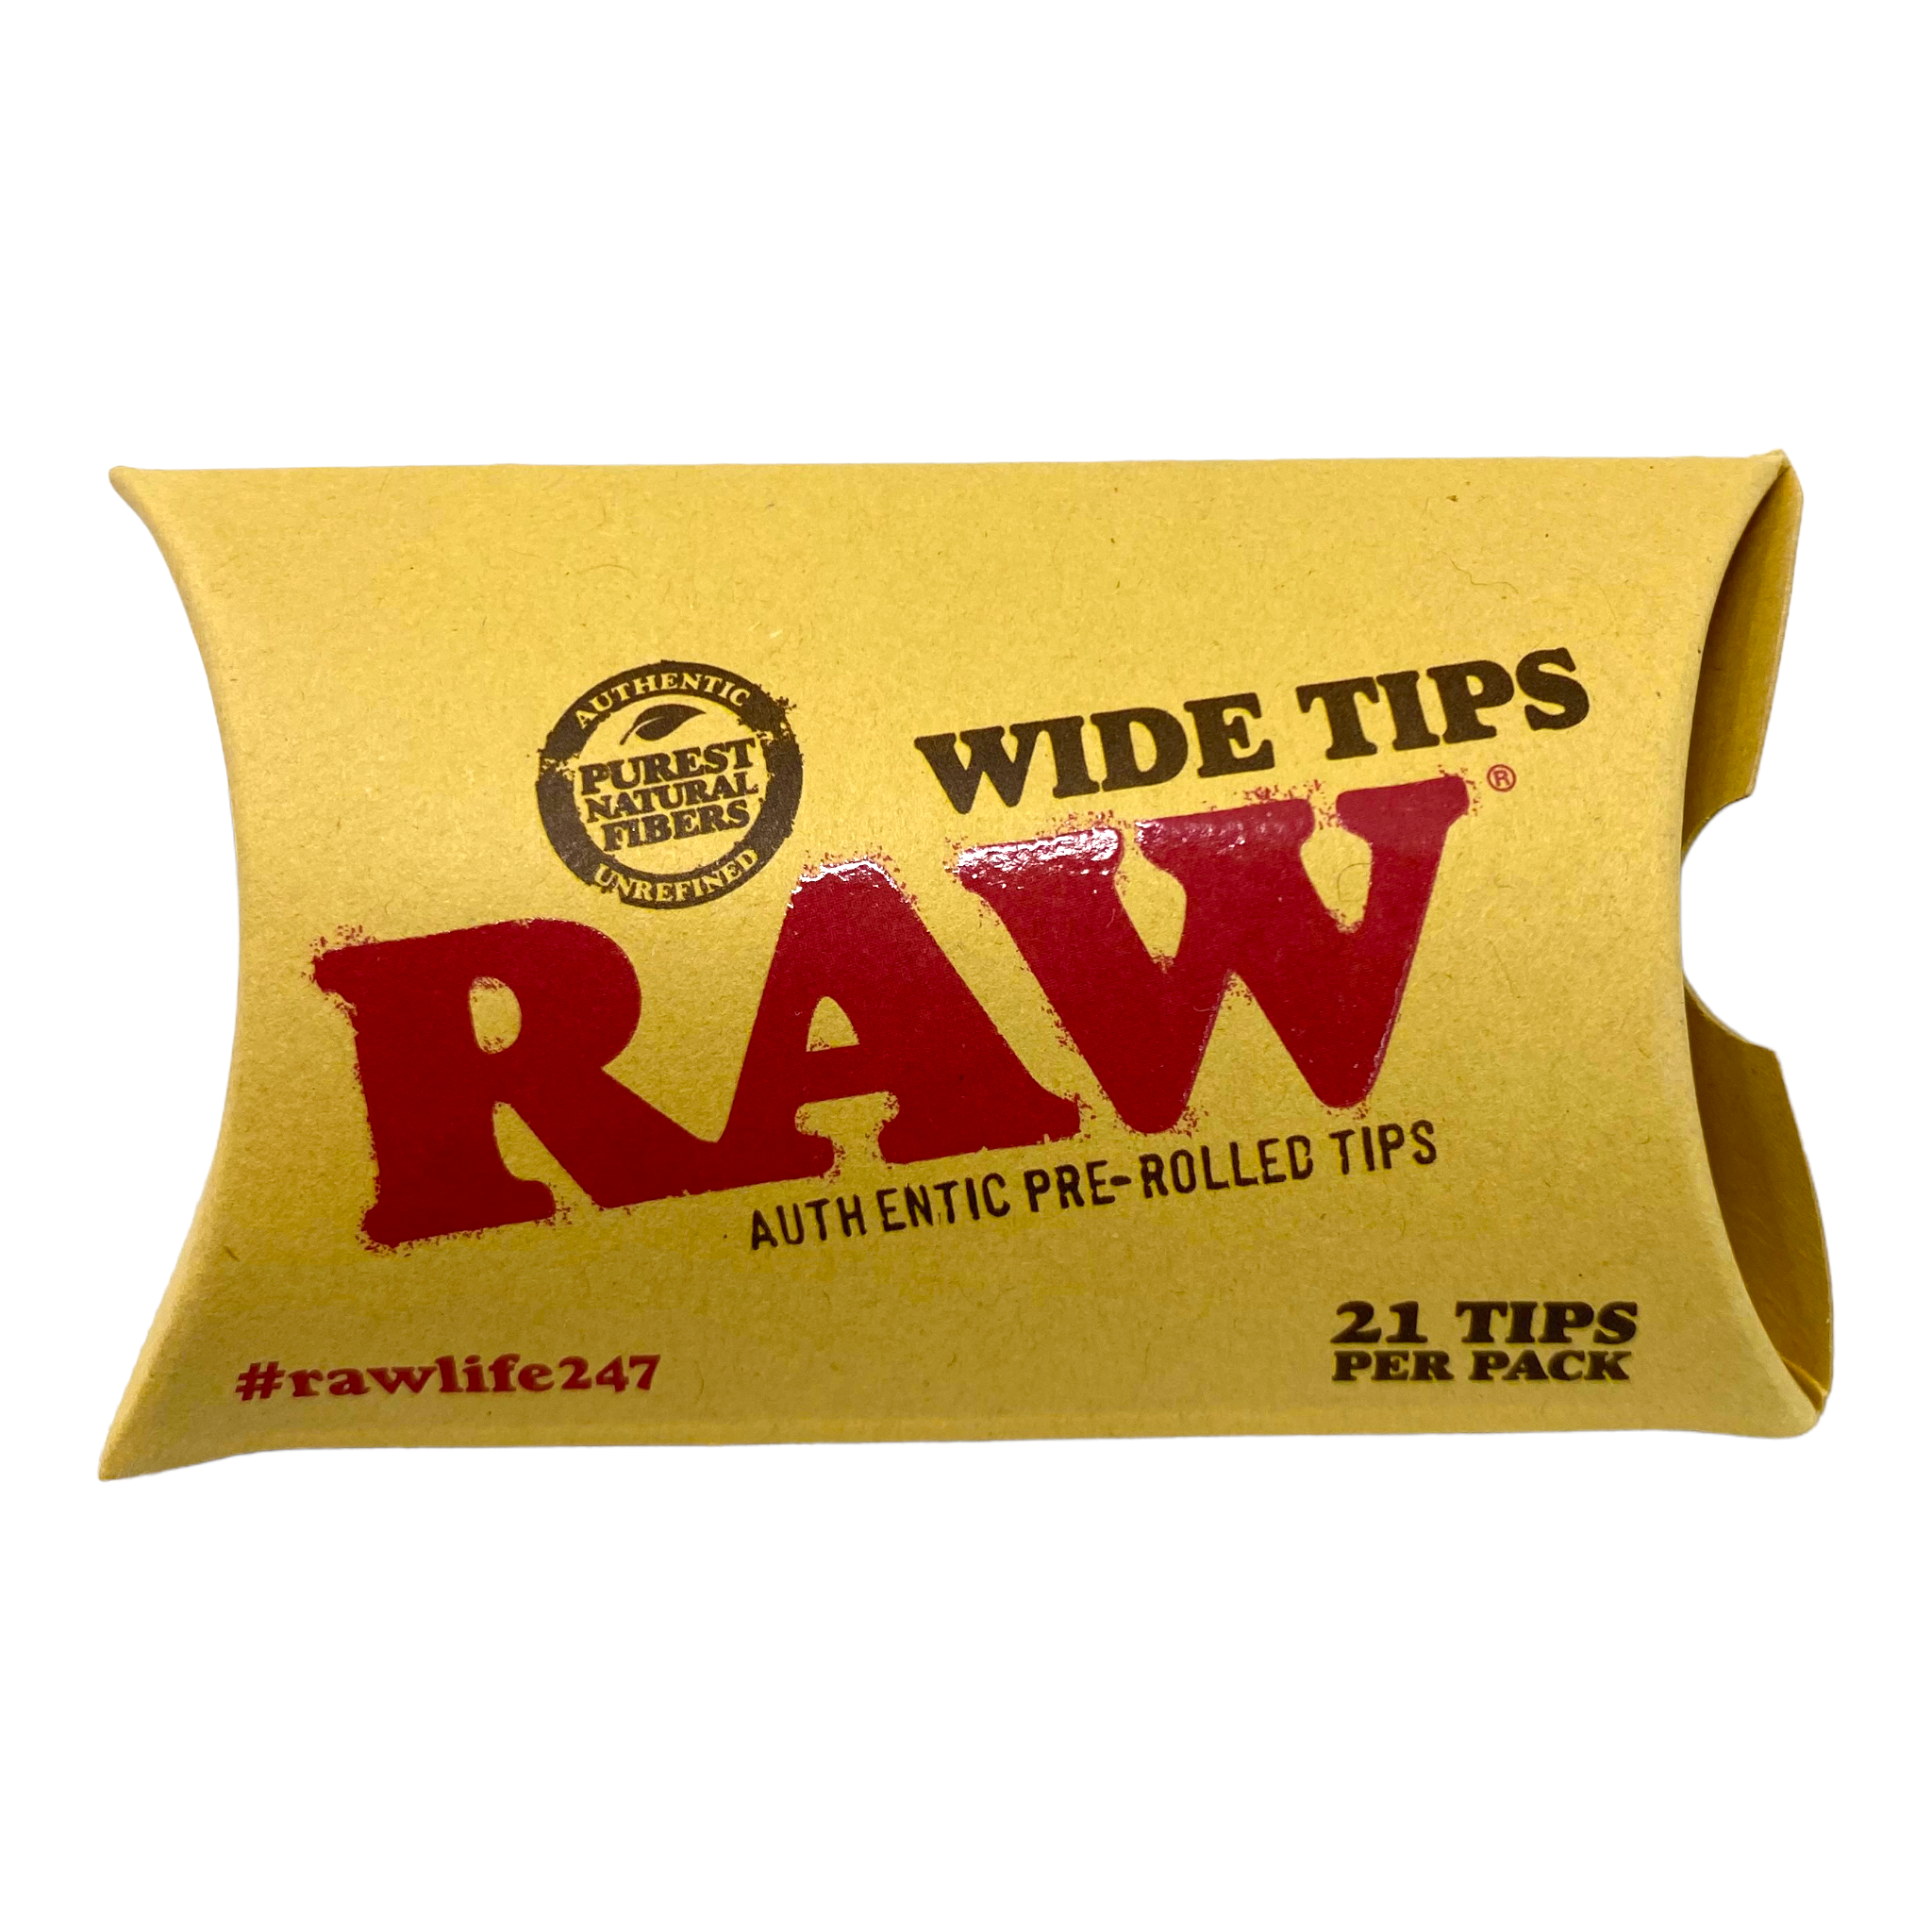 RAW Tips